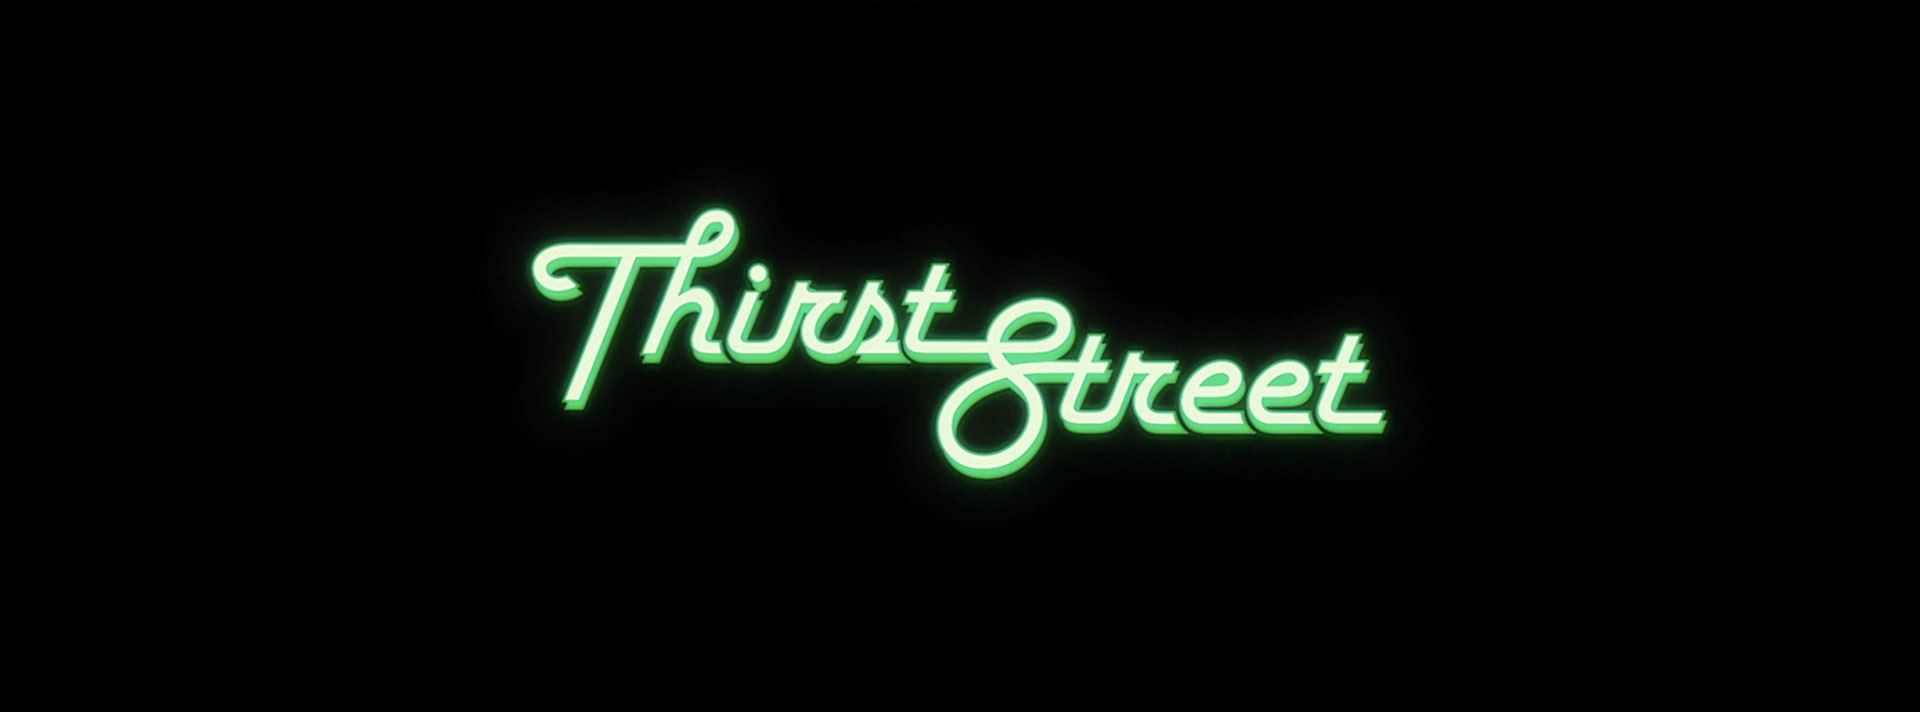 Thirst Street 1